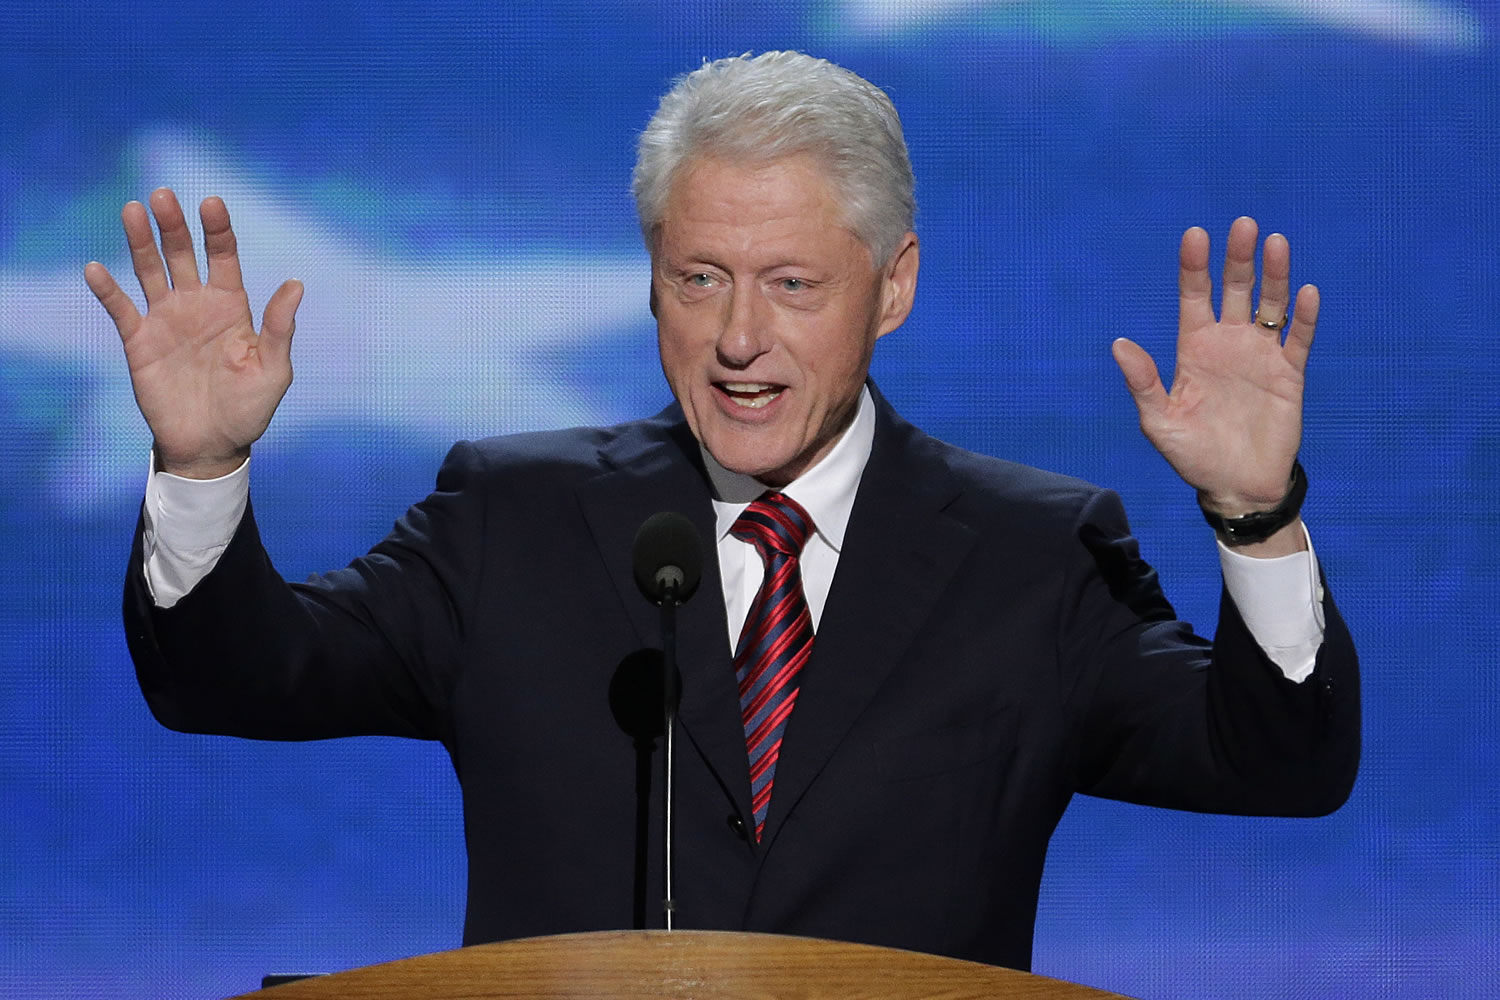 Bill Clinton
Speech rocks Democratic convention